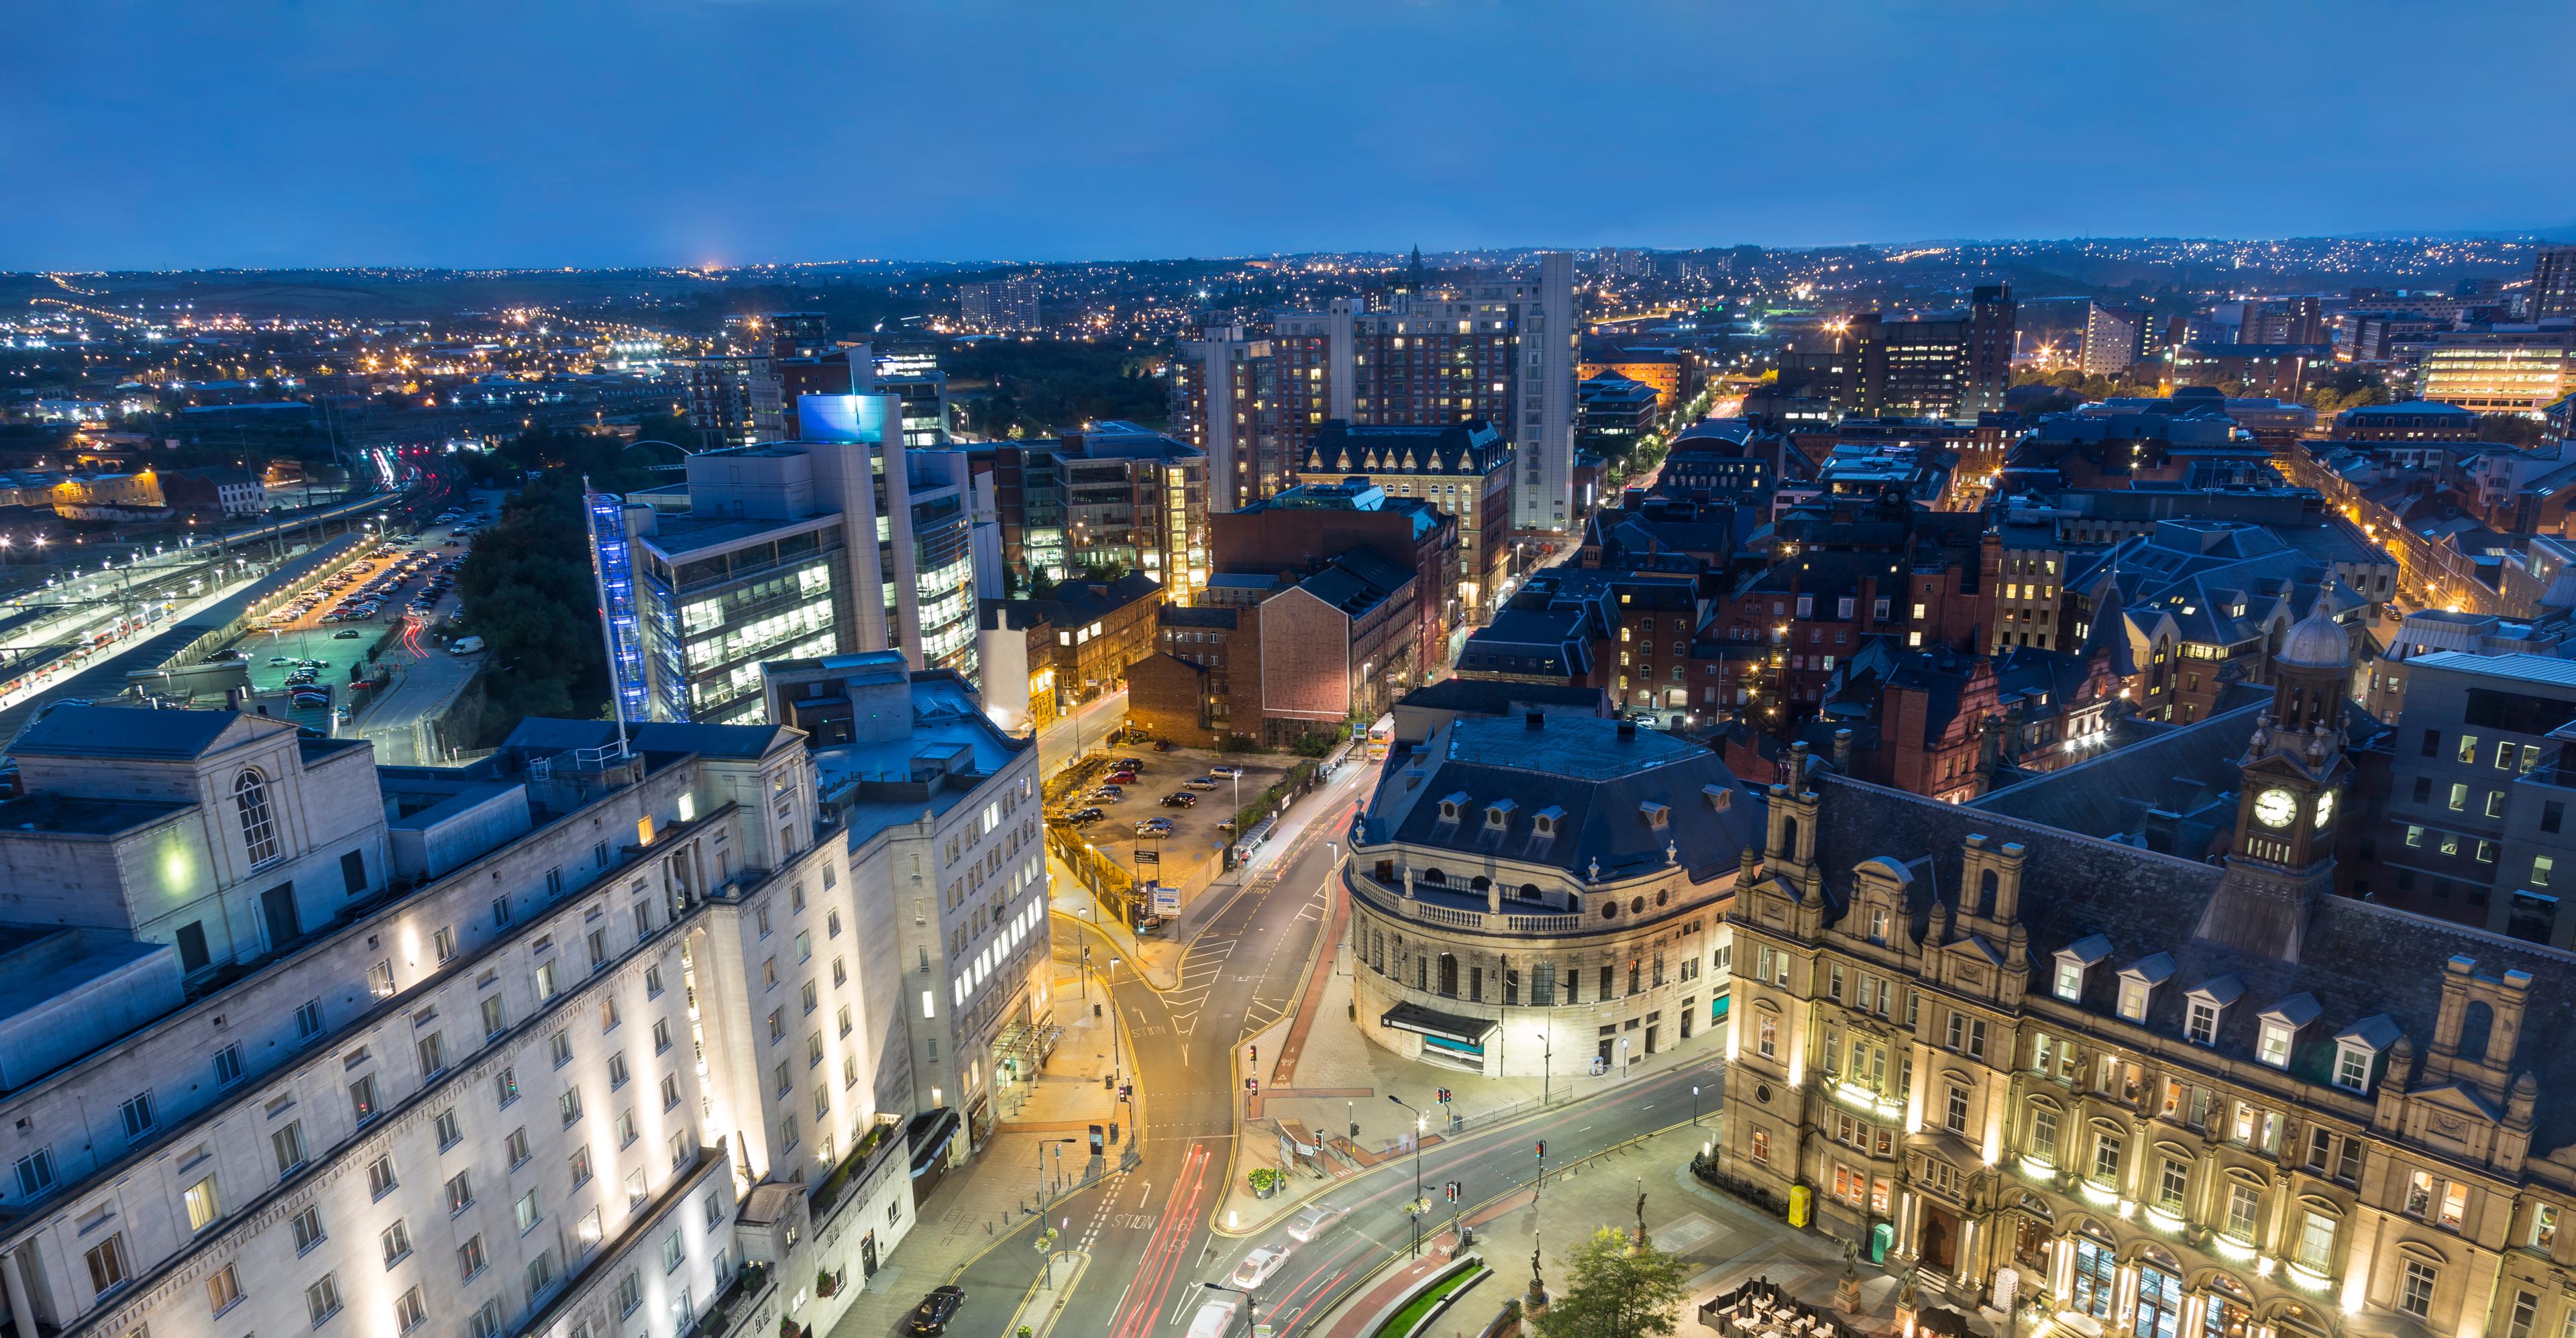 Leeds - An Exciting Tech Hub